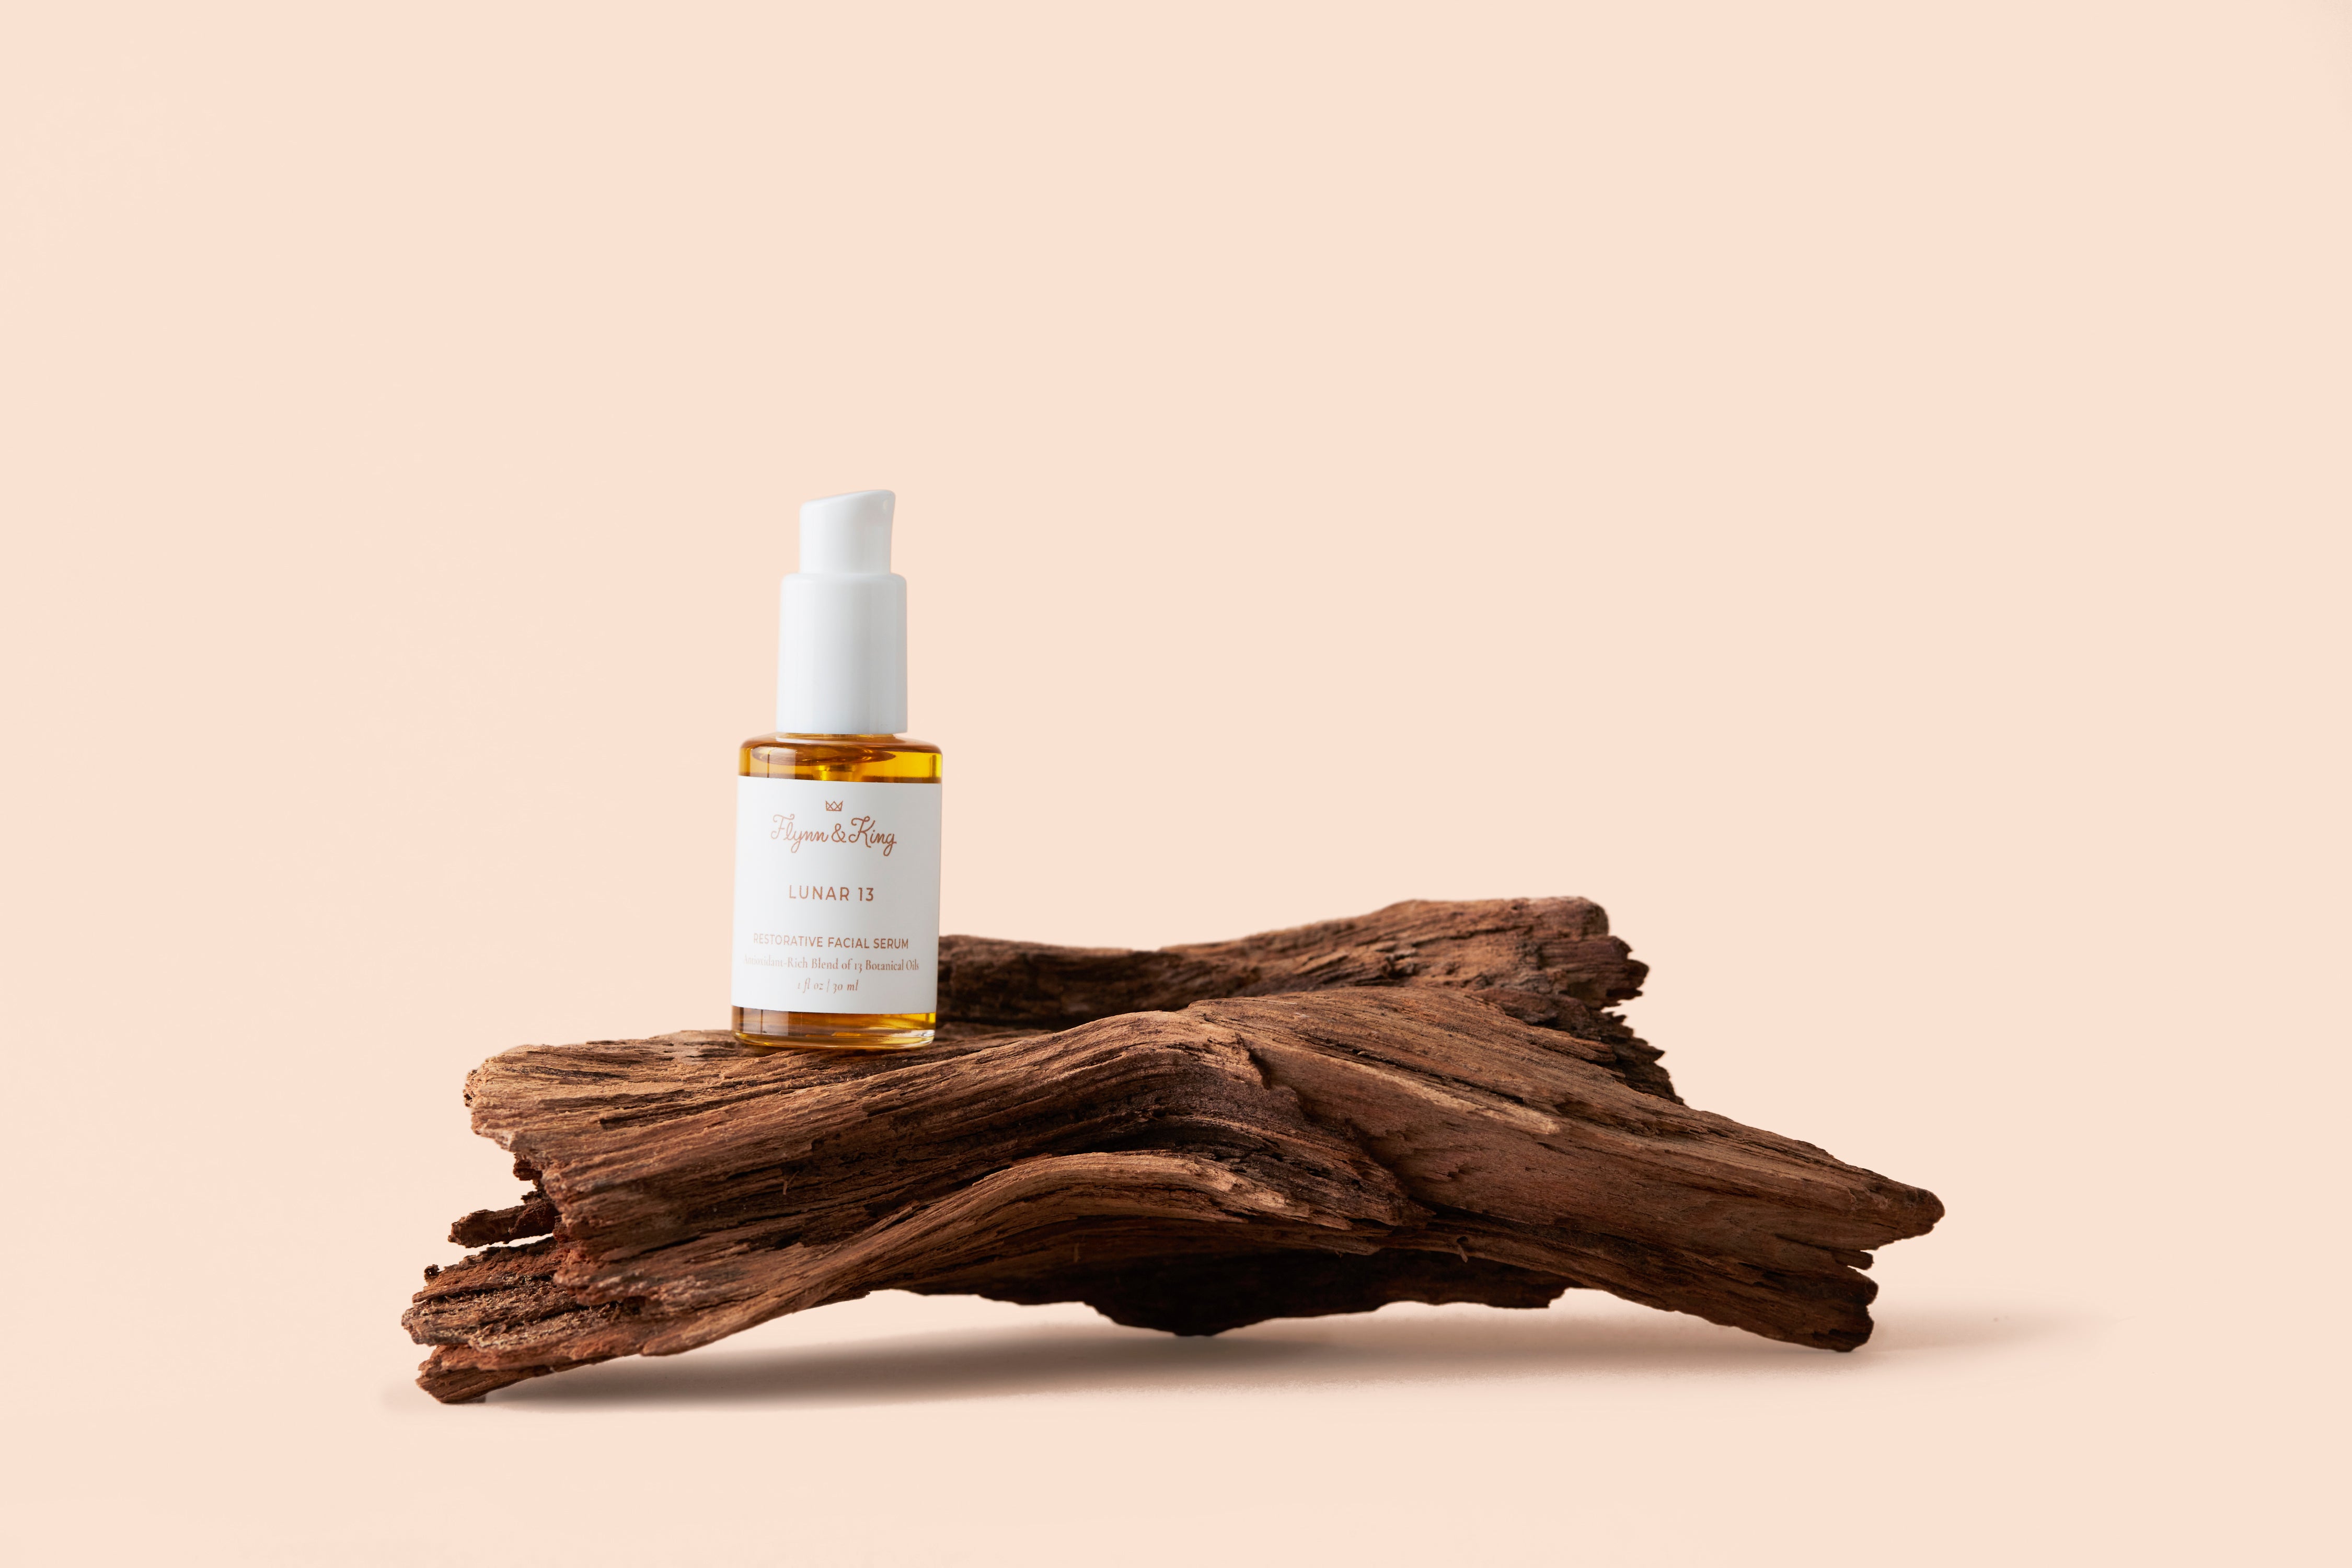 Lunar 13 Restorative Facial Serum with Antioxidant-Rich Blend of 13 Botanical Oils on a small log